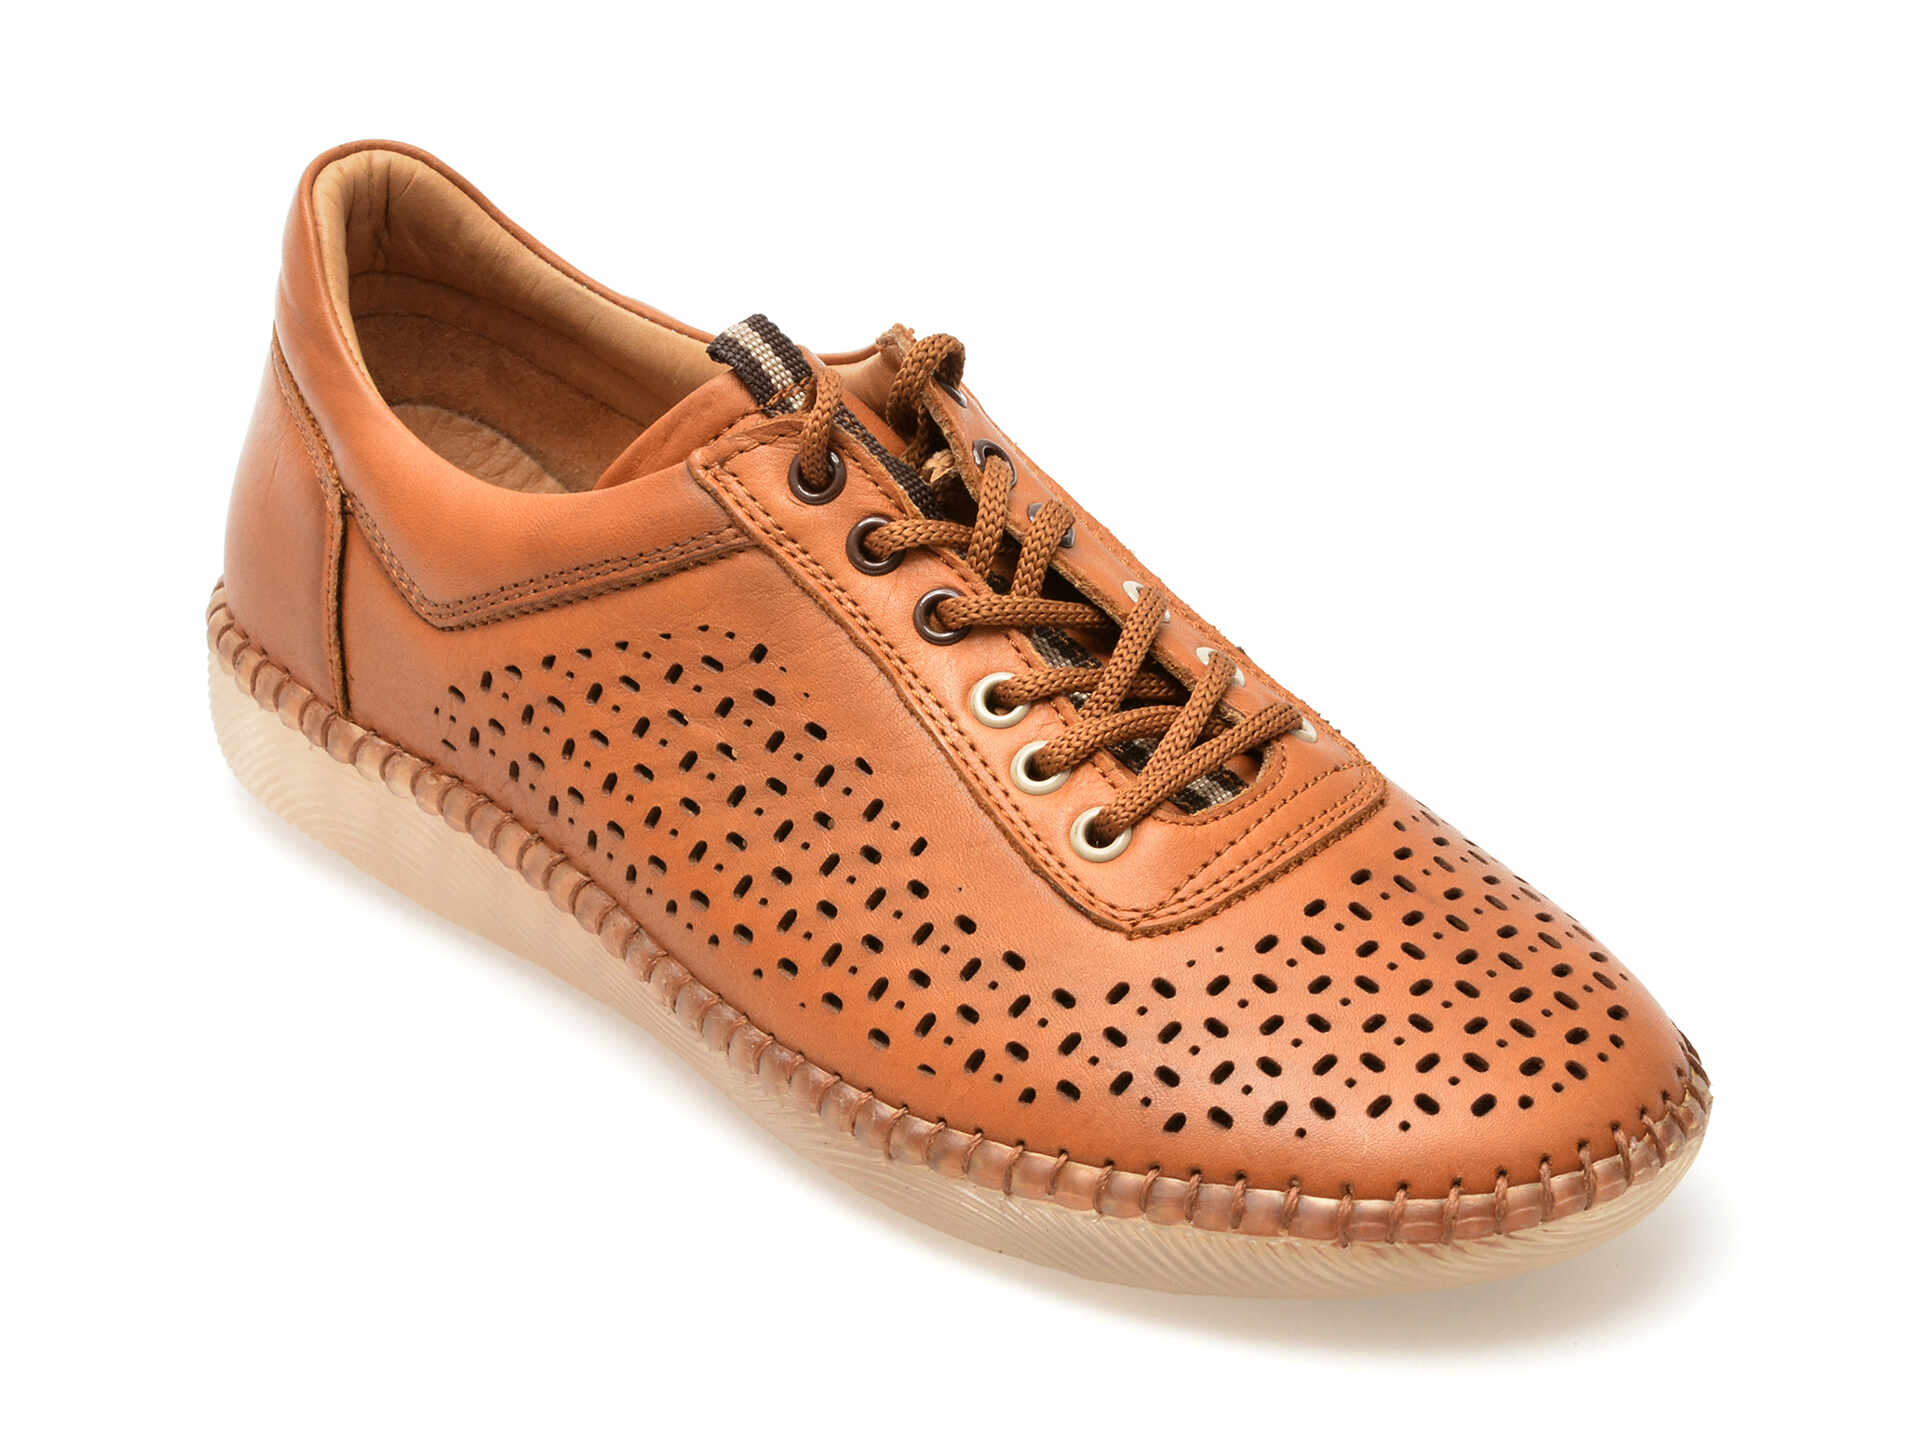 Pantofi OZIYS maro, 22109, din piele naturala